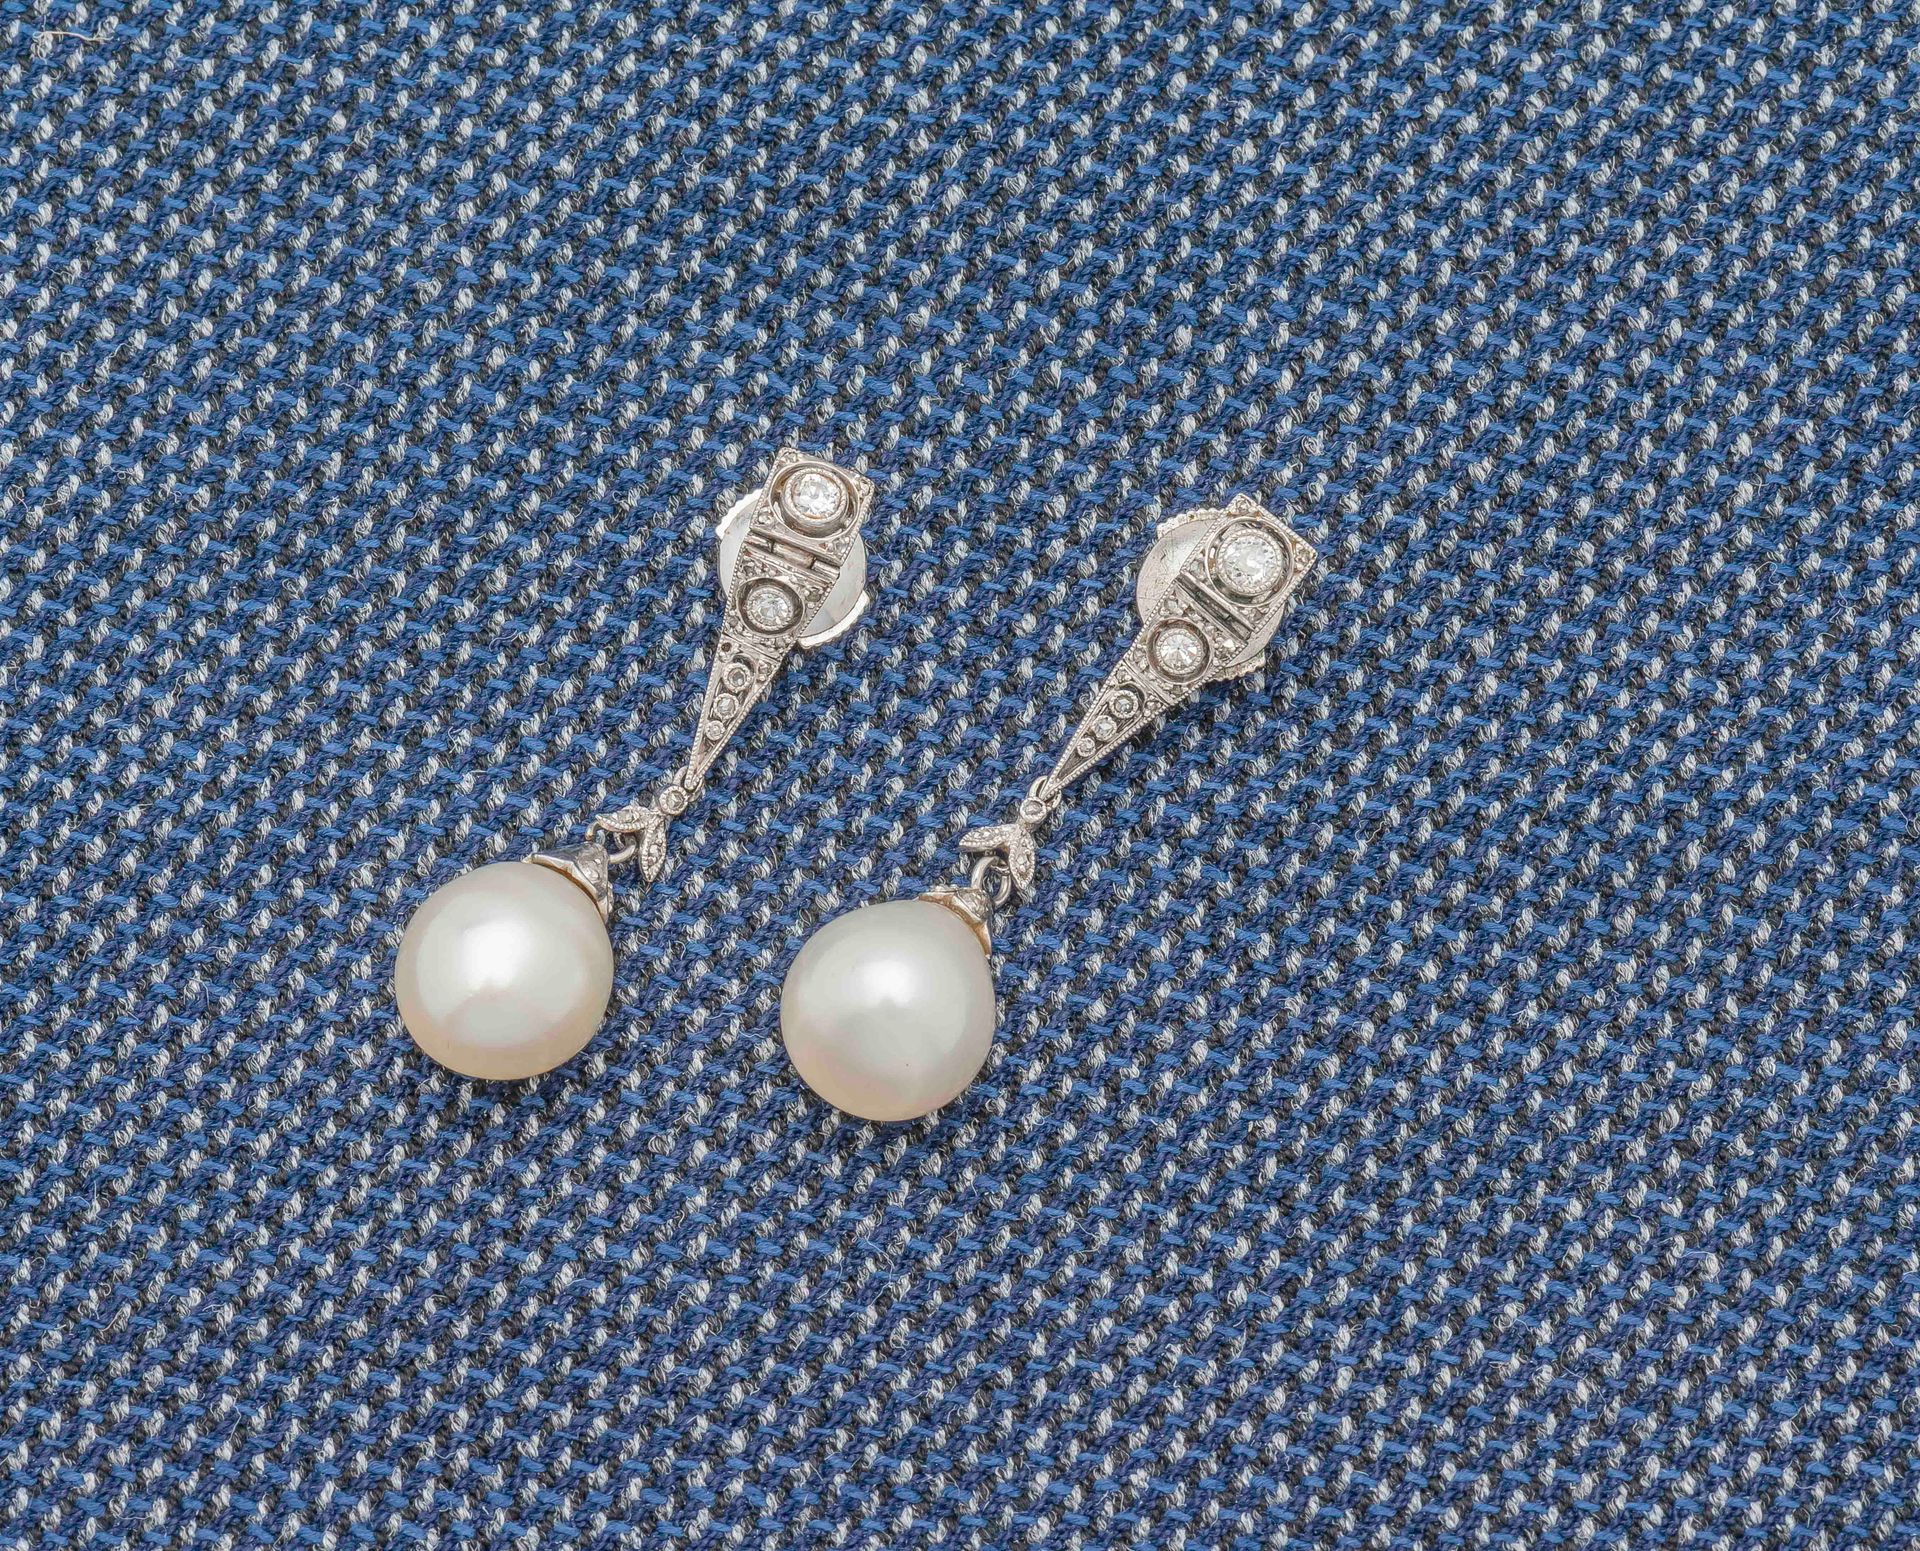 Null 一对铂金(950 ‰)耳环，每只耳环上都有一连串坠落的钻石，托着一颗水滴形养殖珍珠。法国作品，20世纪初，印有Charles Garnier字样。

&hellip;